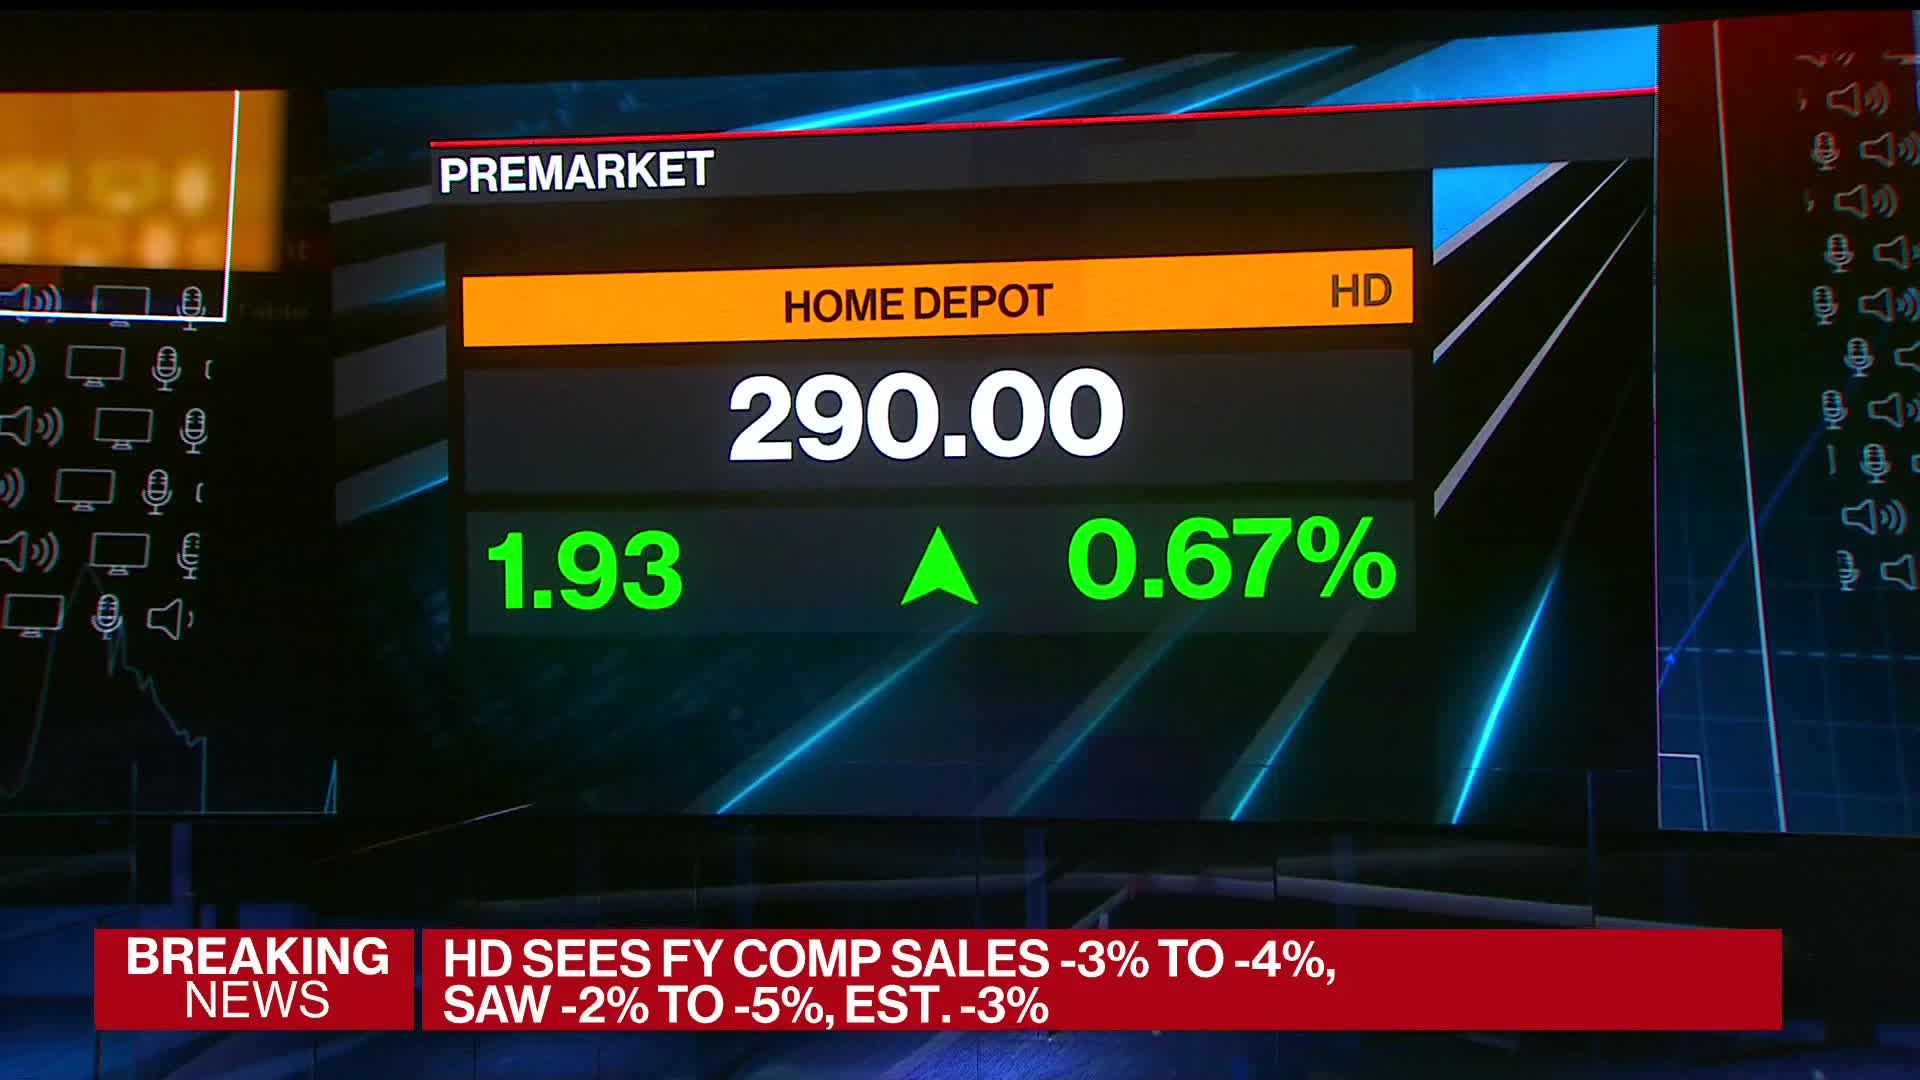 Home Depot jumps as sales rise on home-improvement demand - BNN Bloomberg